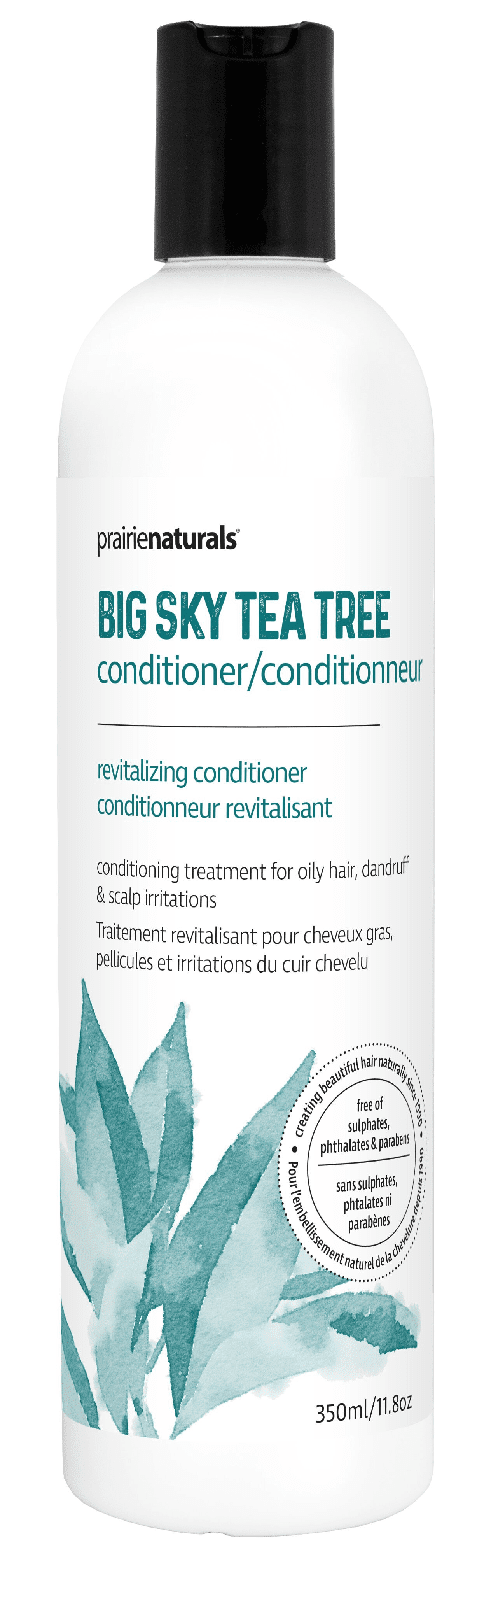 Prairie Naturals Big Sky Tea Tree Revitalizing Conditioner 350 mL Image 1